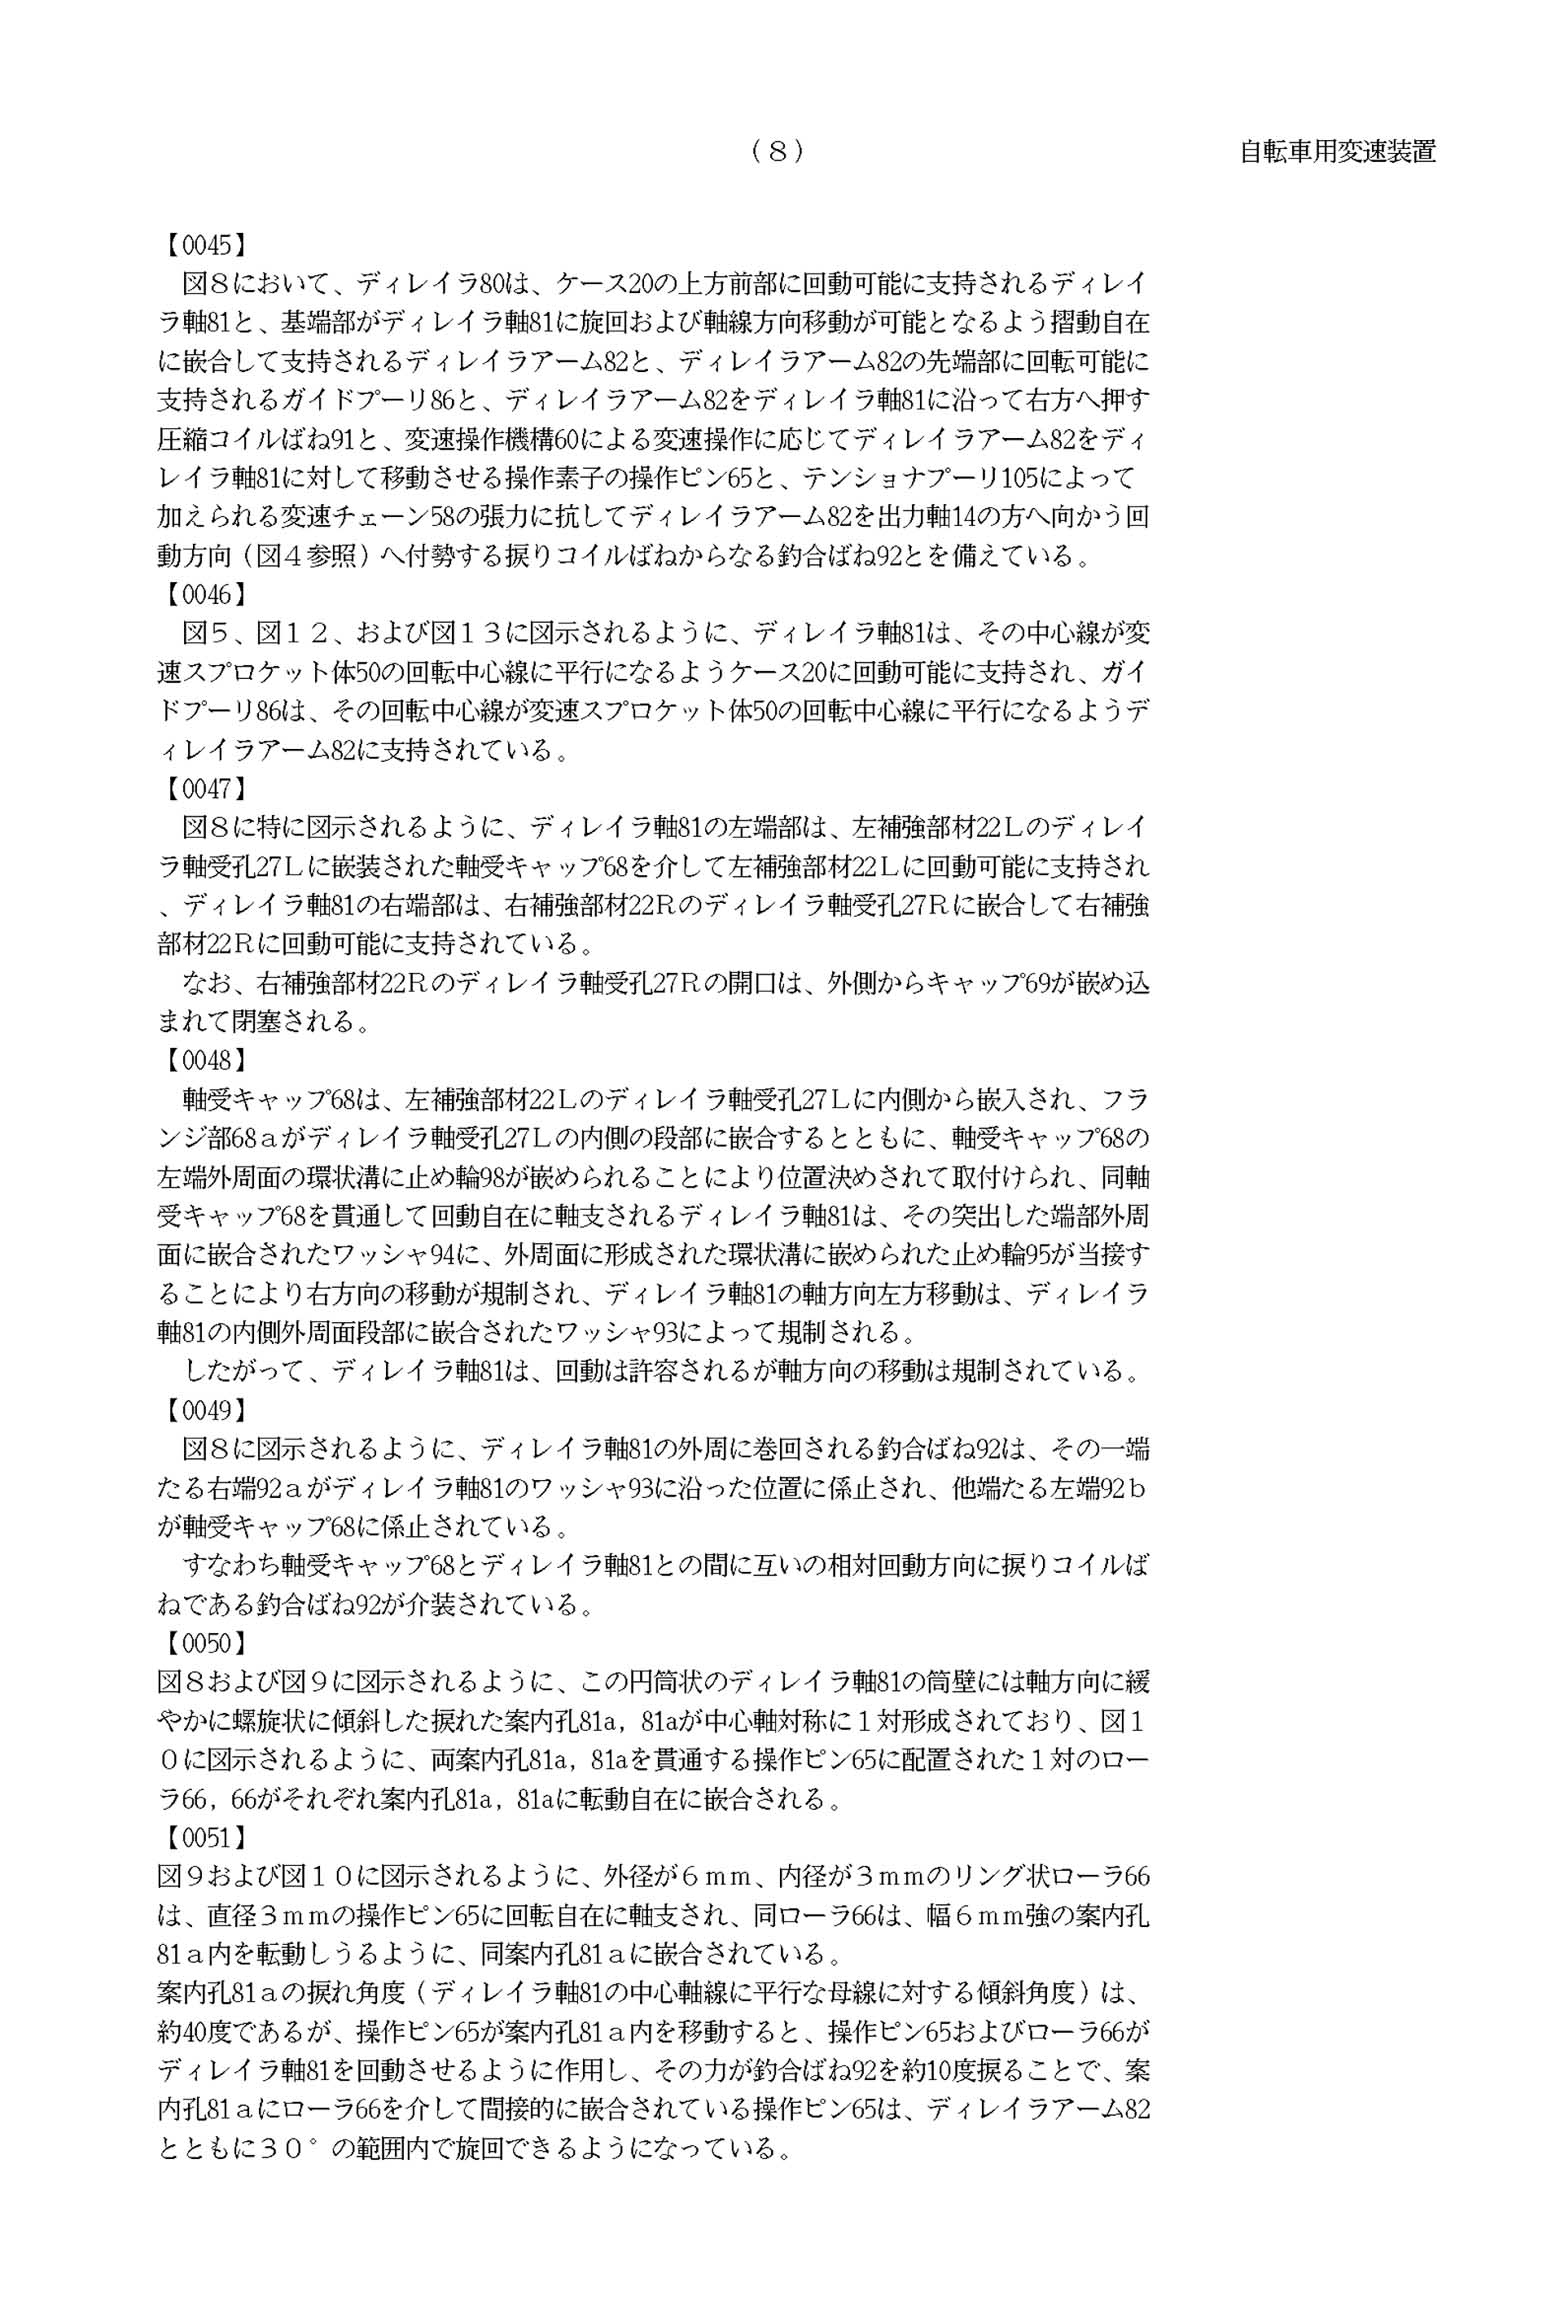 Japanese Patent 4286681 - Honda page 08 main image